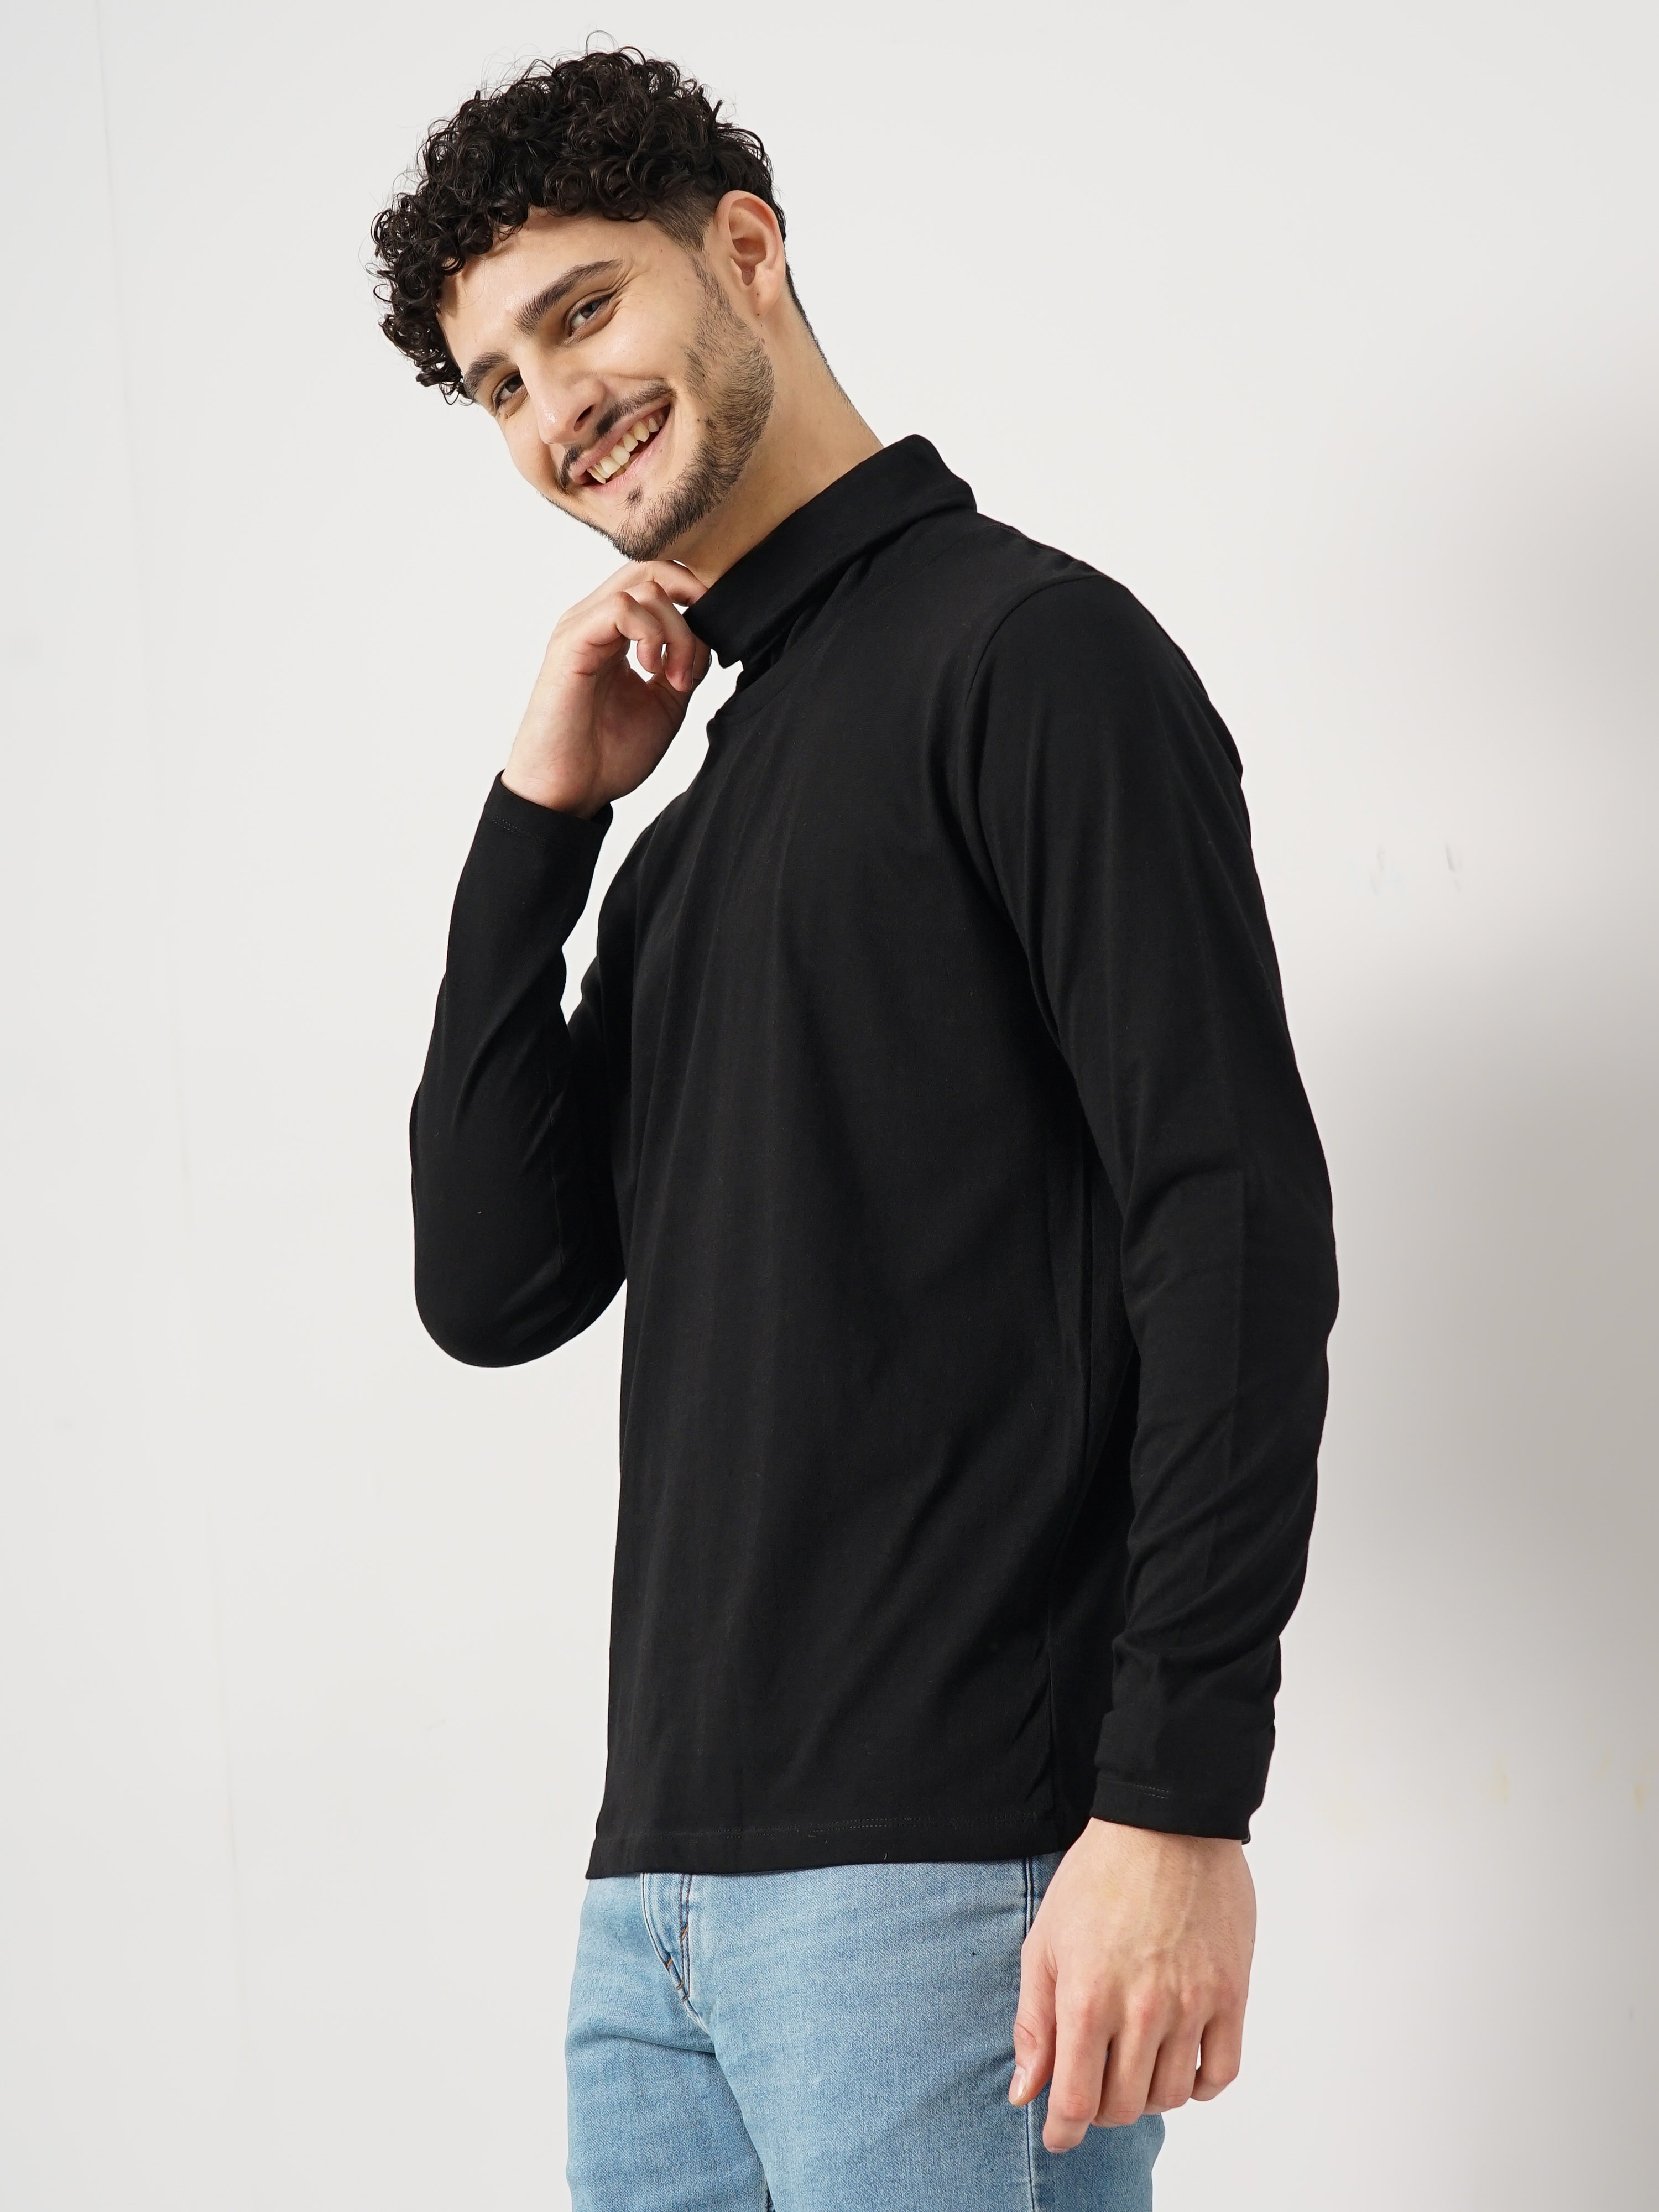 Celio Men's Solid Black Full Sleeve Turtle Neck Fashion Tshirt